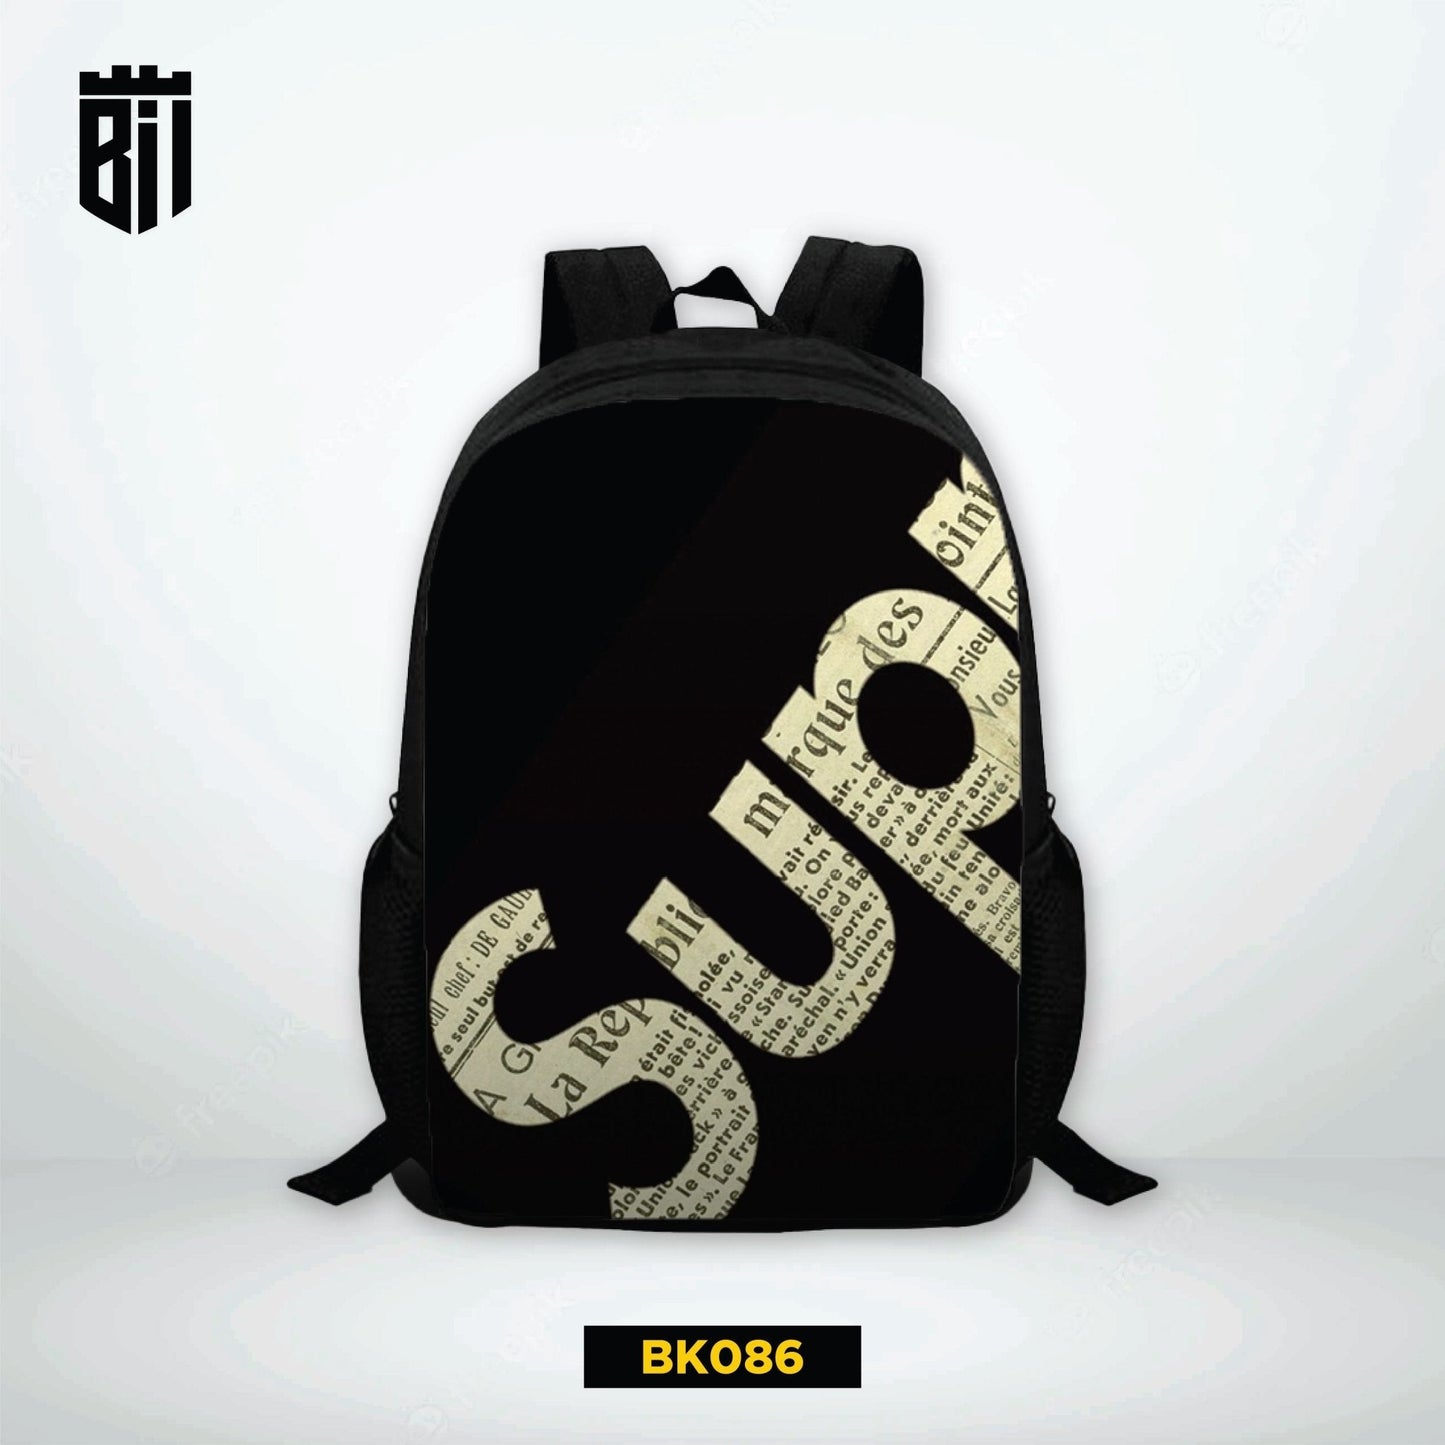 BK086 Supreme Backpack - BREACHIT